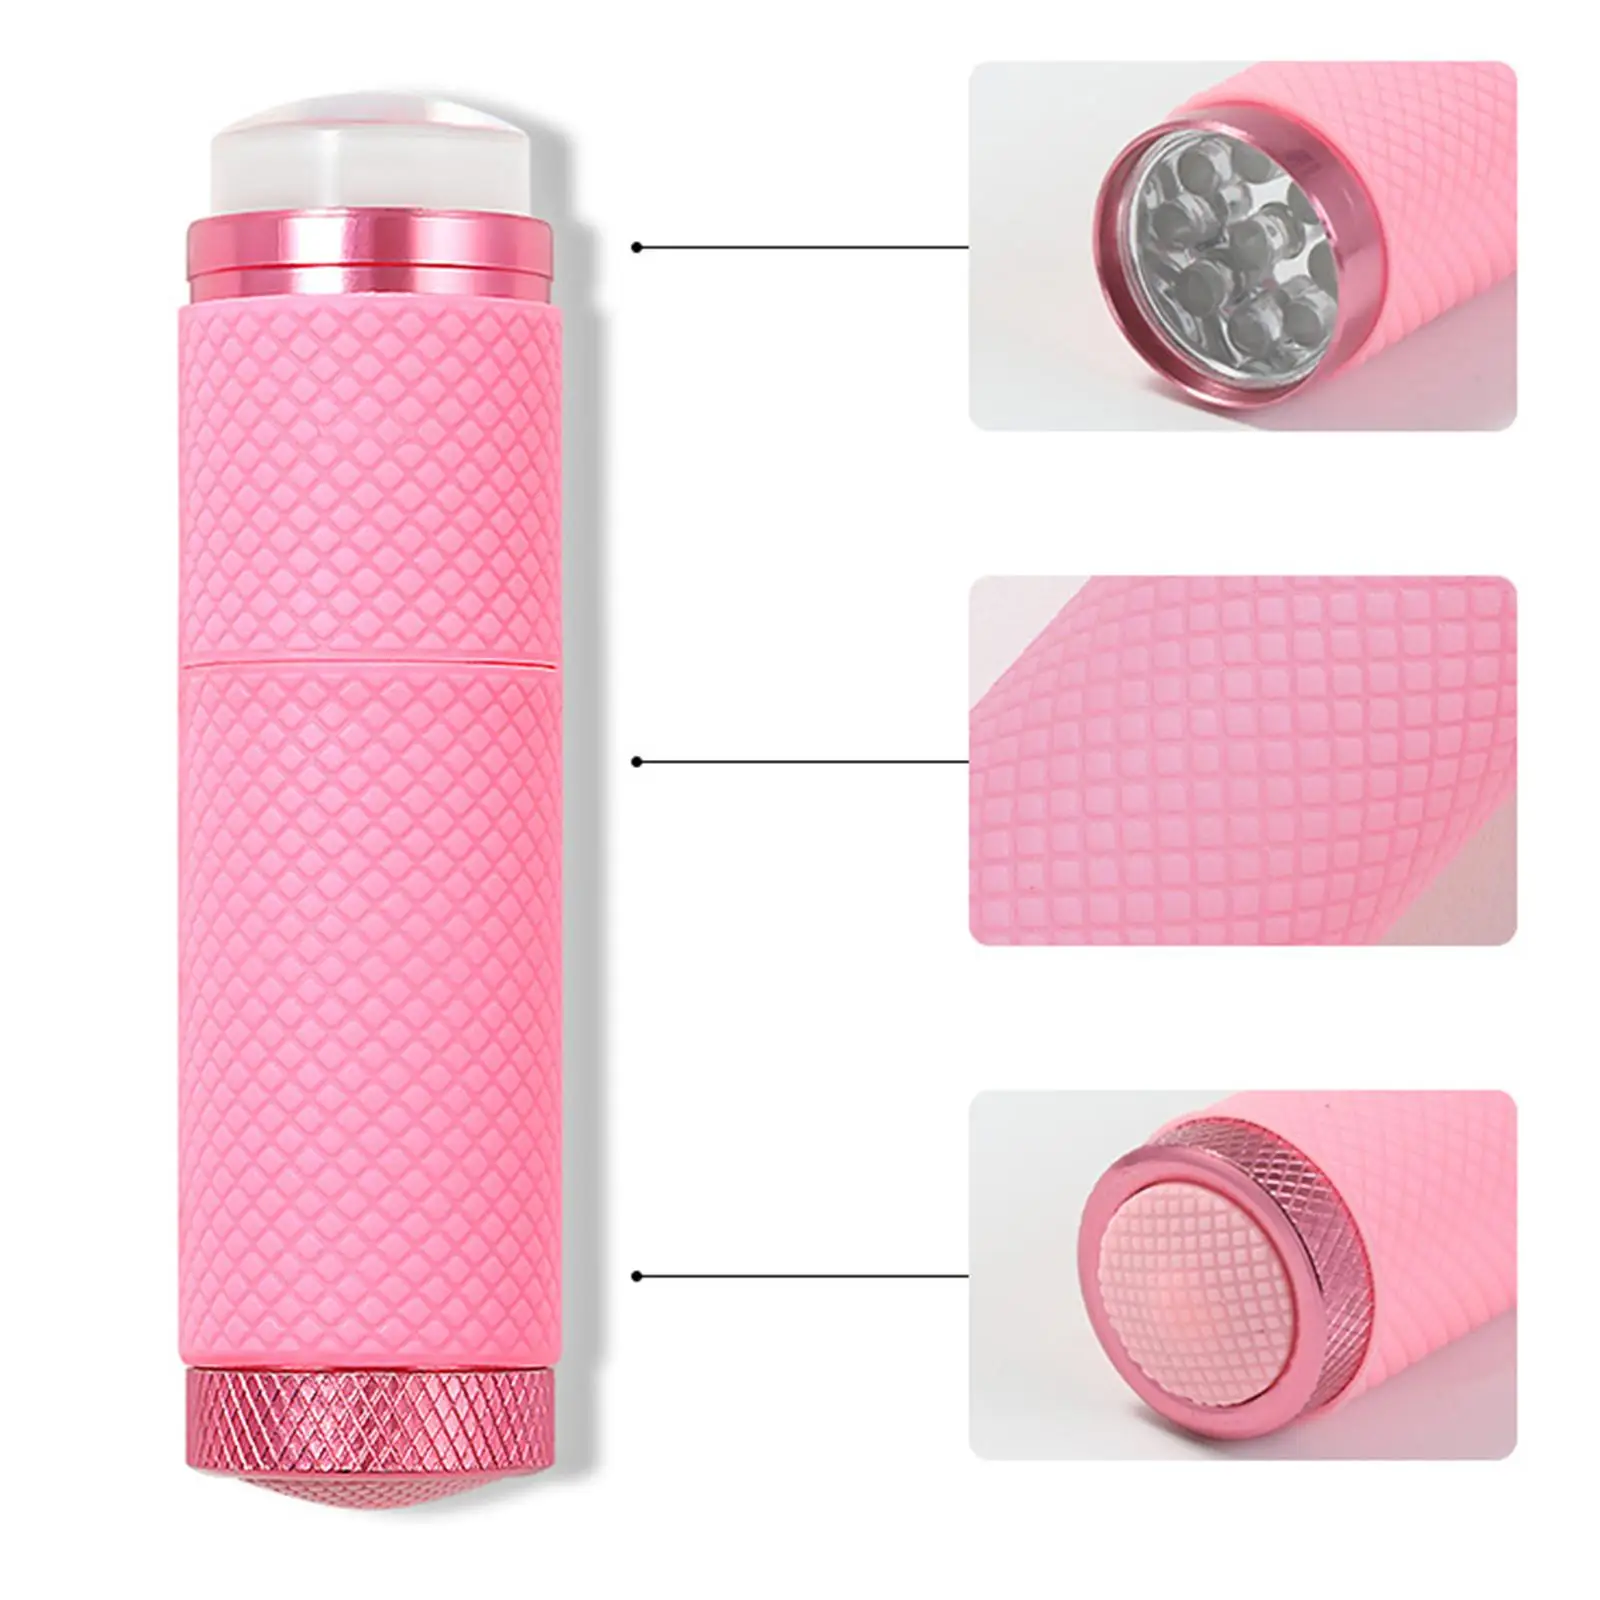 Mini UV LED Lamp Nail Dryer Pink Nail Art Dryer Machine for Fits All Nail ARC Girl